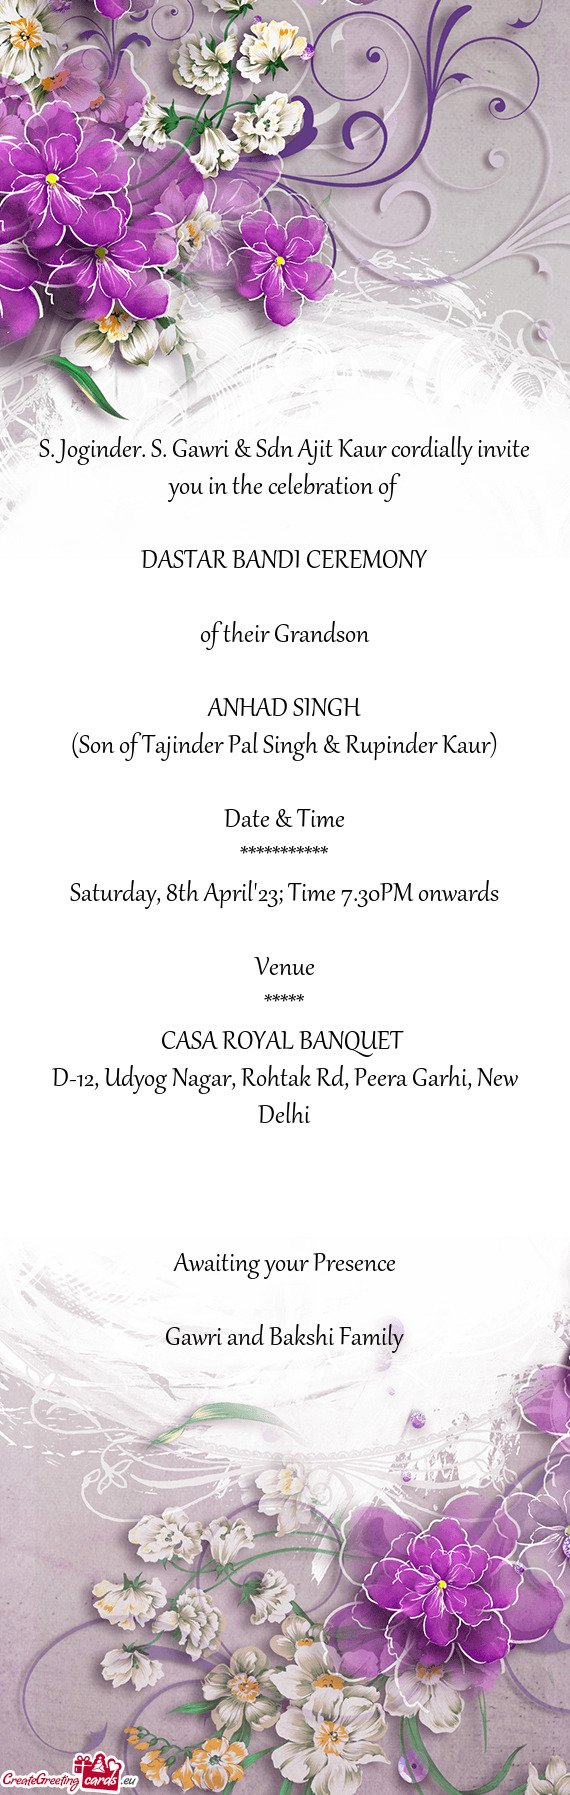 S. Joginder. S. Gawri & Sdn Ajit Kaur cordially invite you in the celebration of